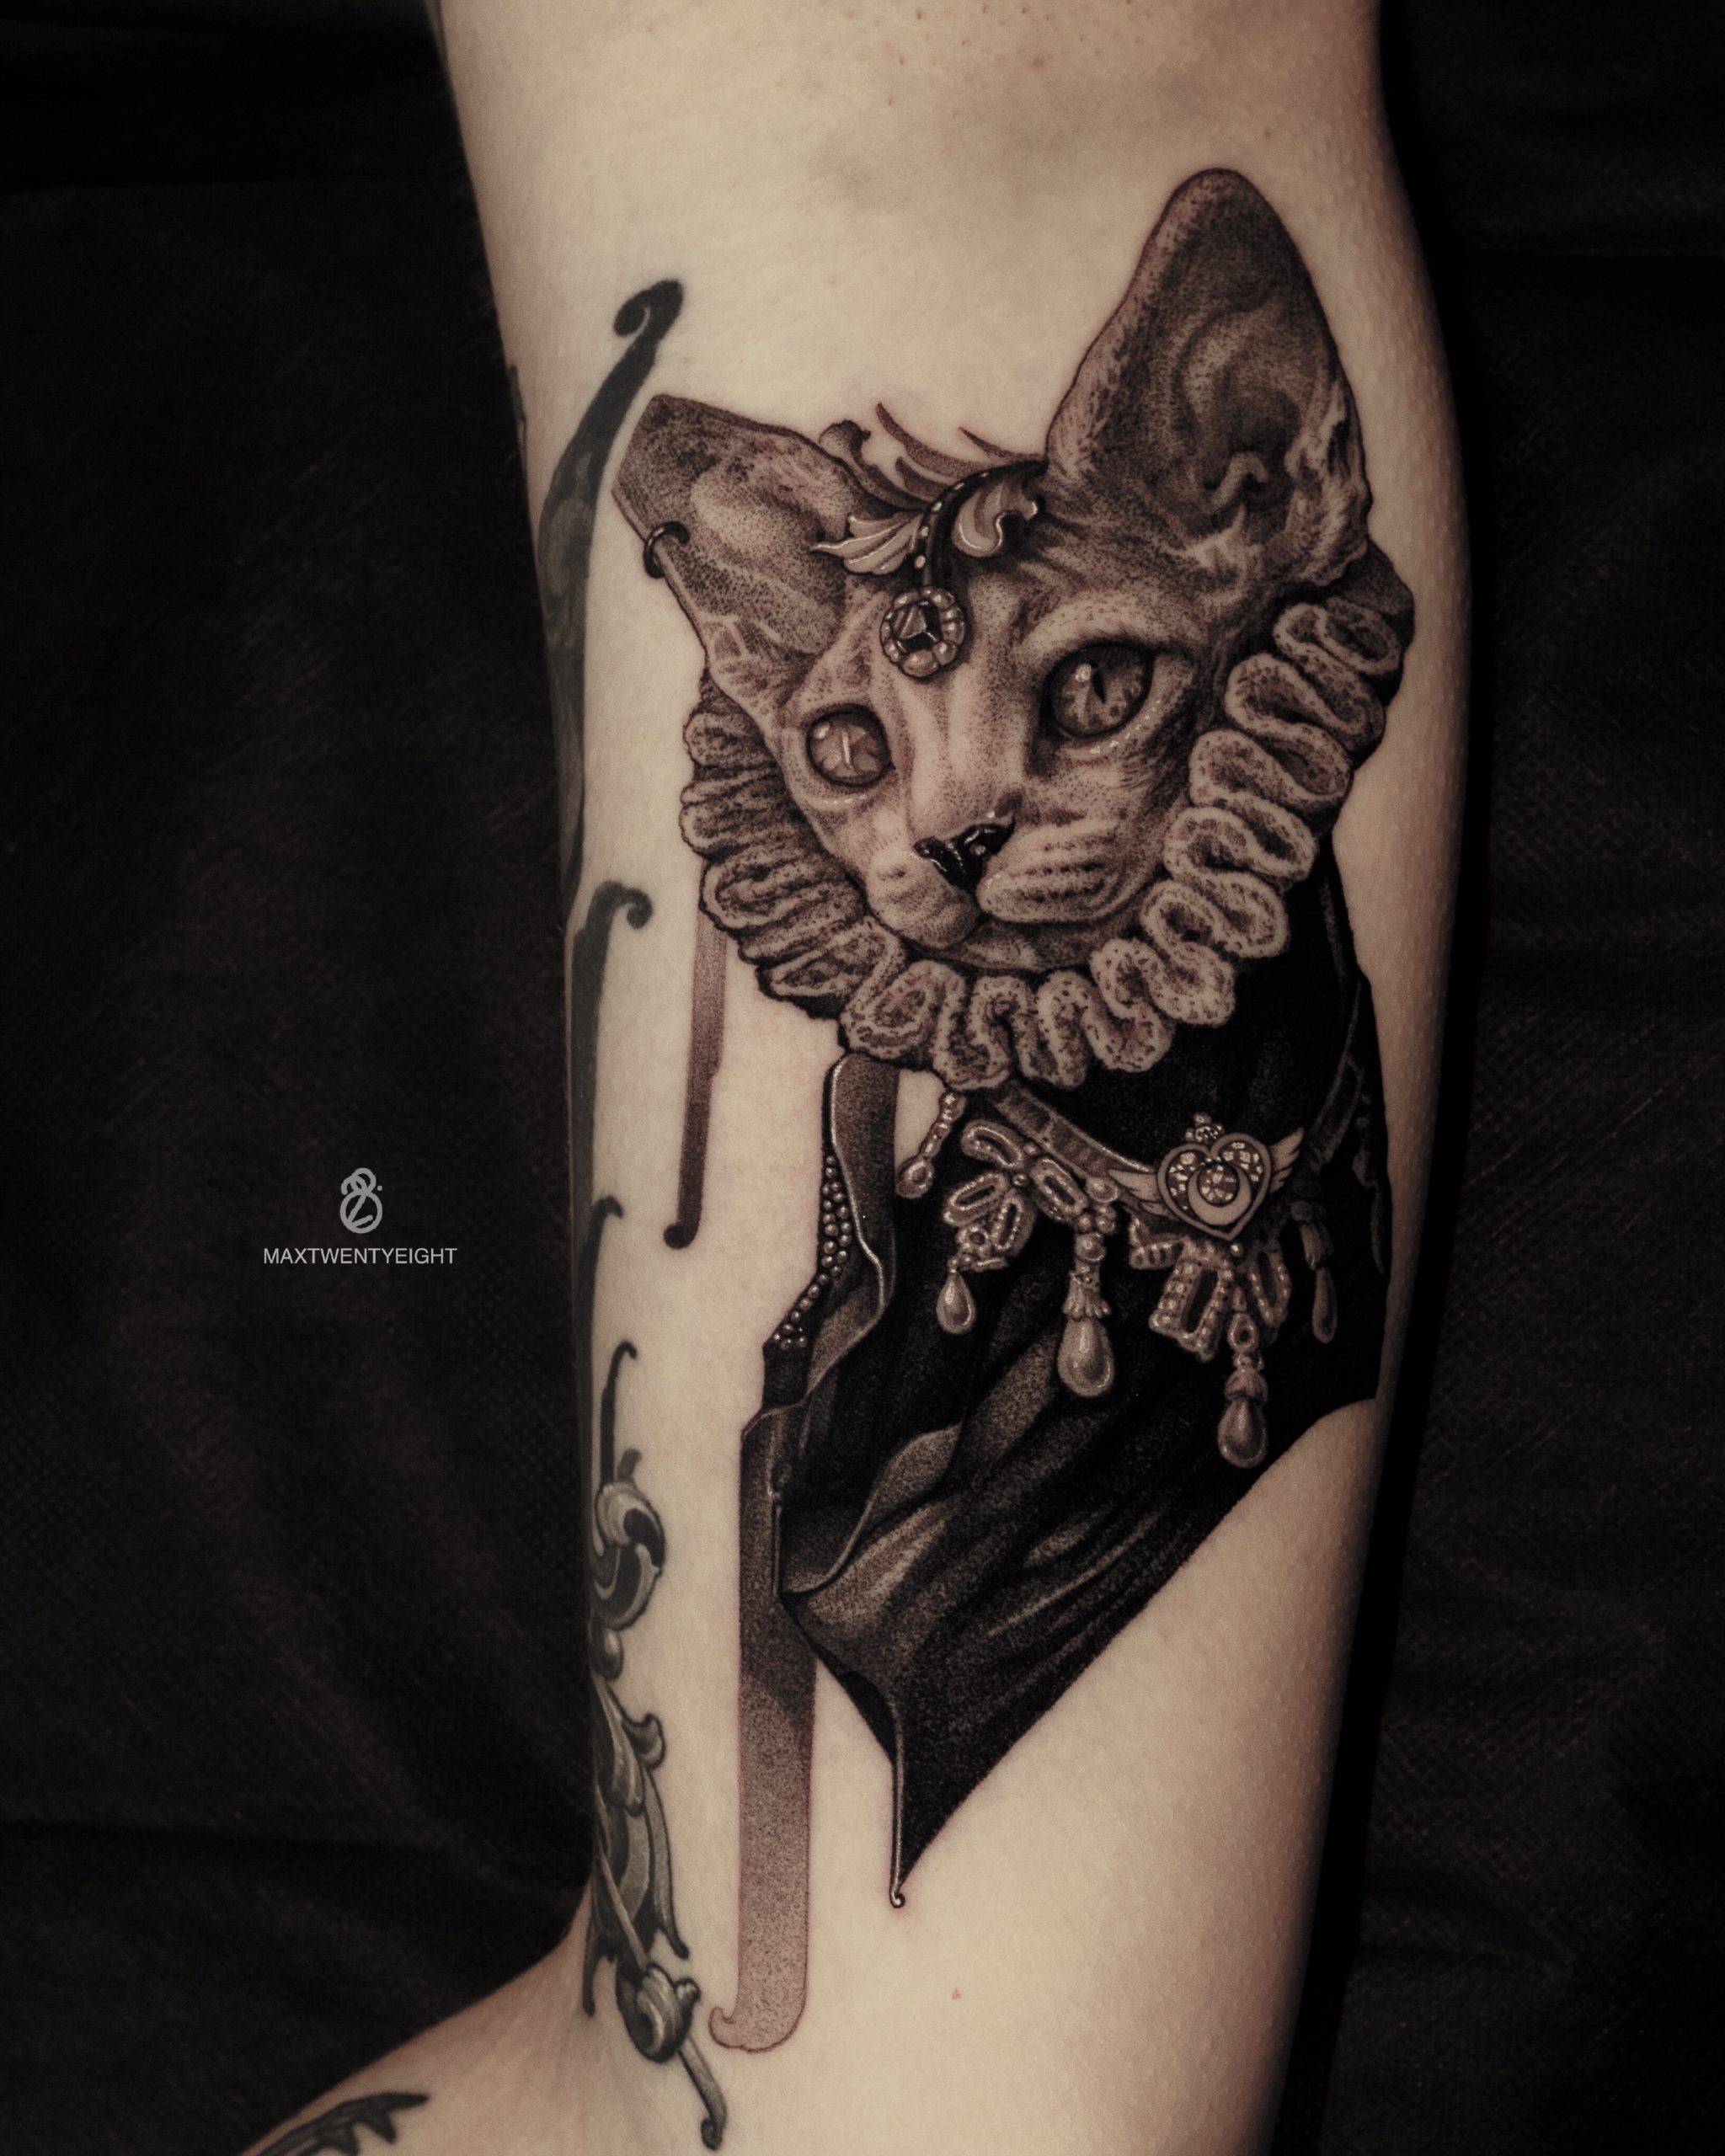 Cat Print Tattoo Artists, Pictures Cat Tattoos